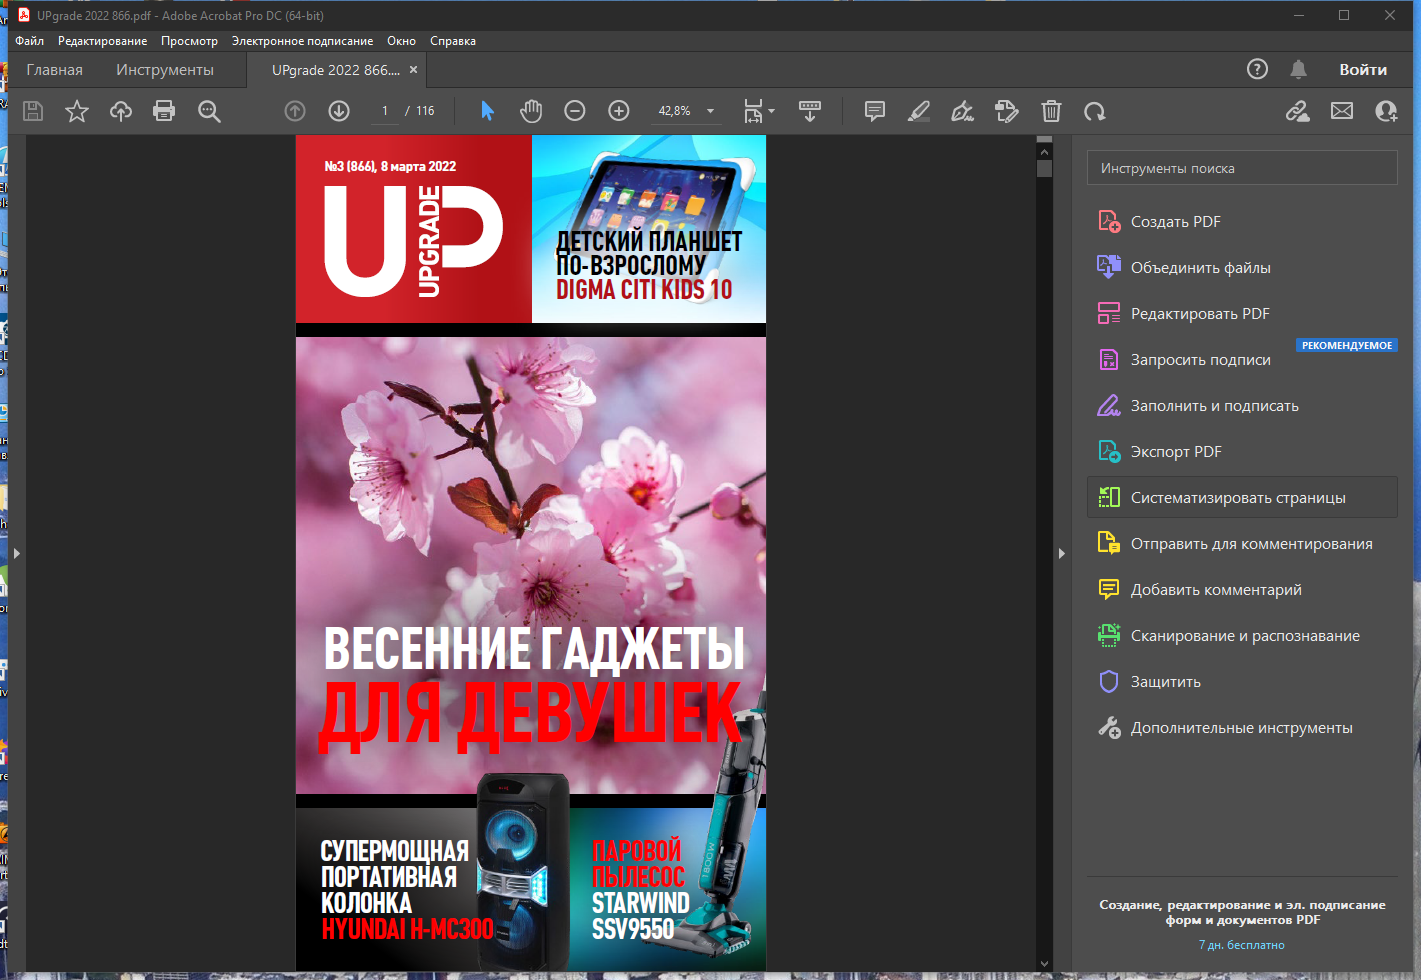 Adobe Acrobat Pro DC 2022.001.20117 RePack by KpoJIuK [Multi/Ru]